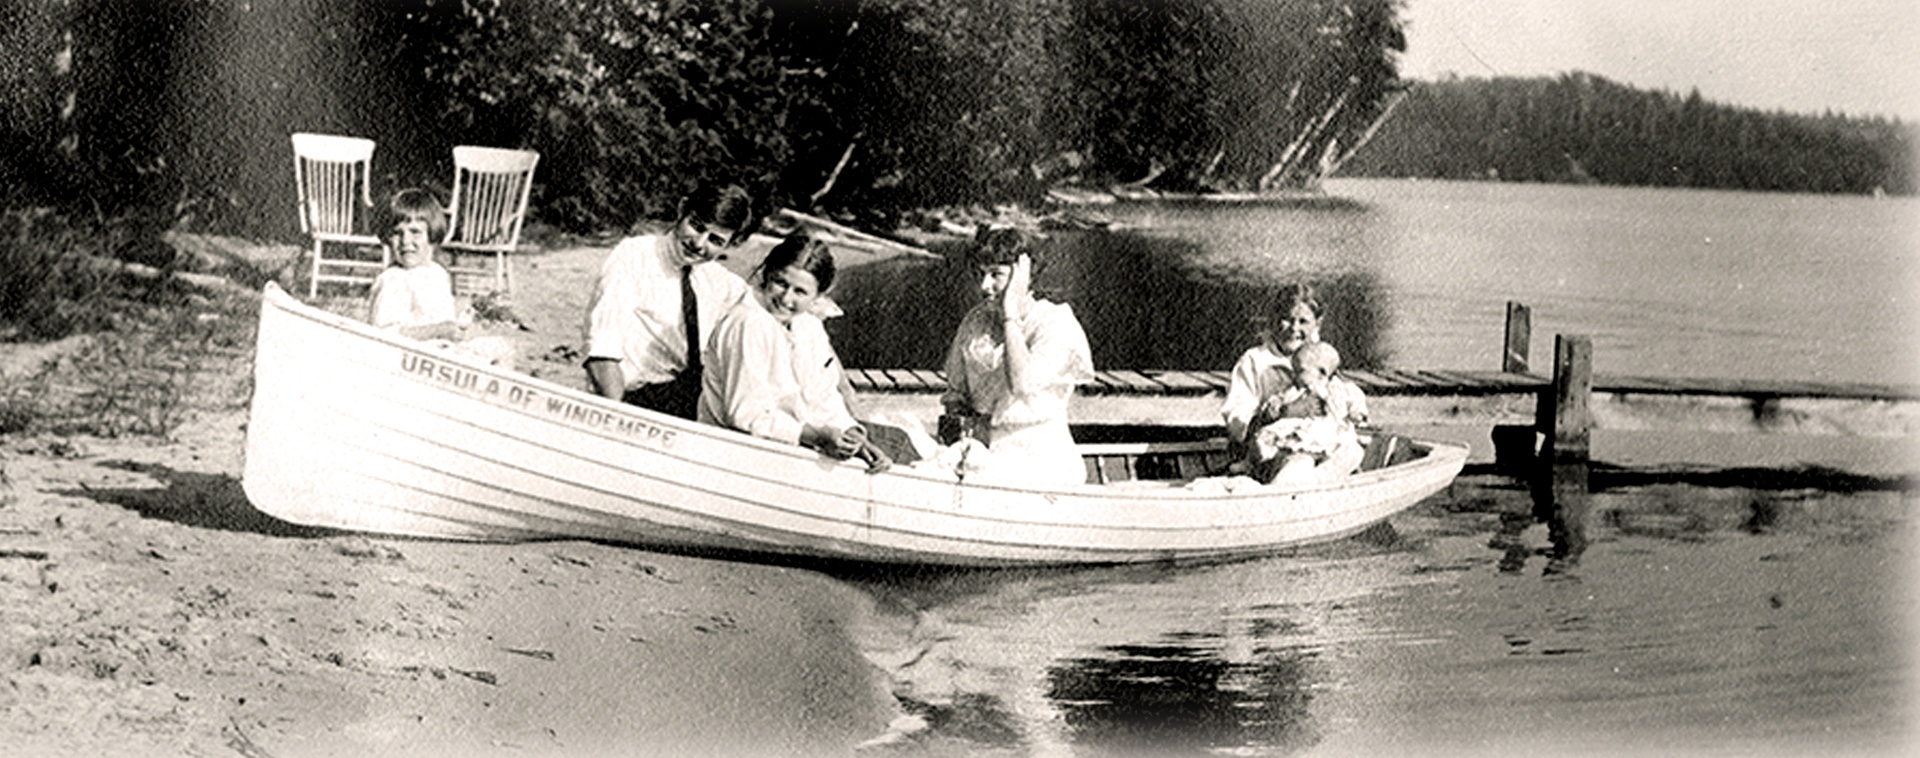 Members of the Hemingway family in a canoe